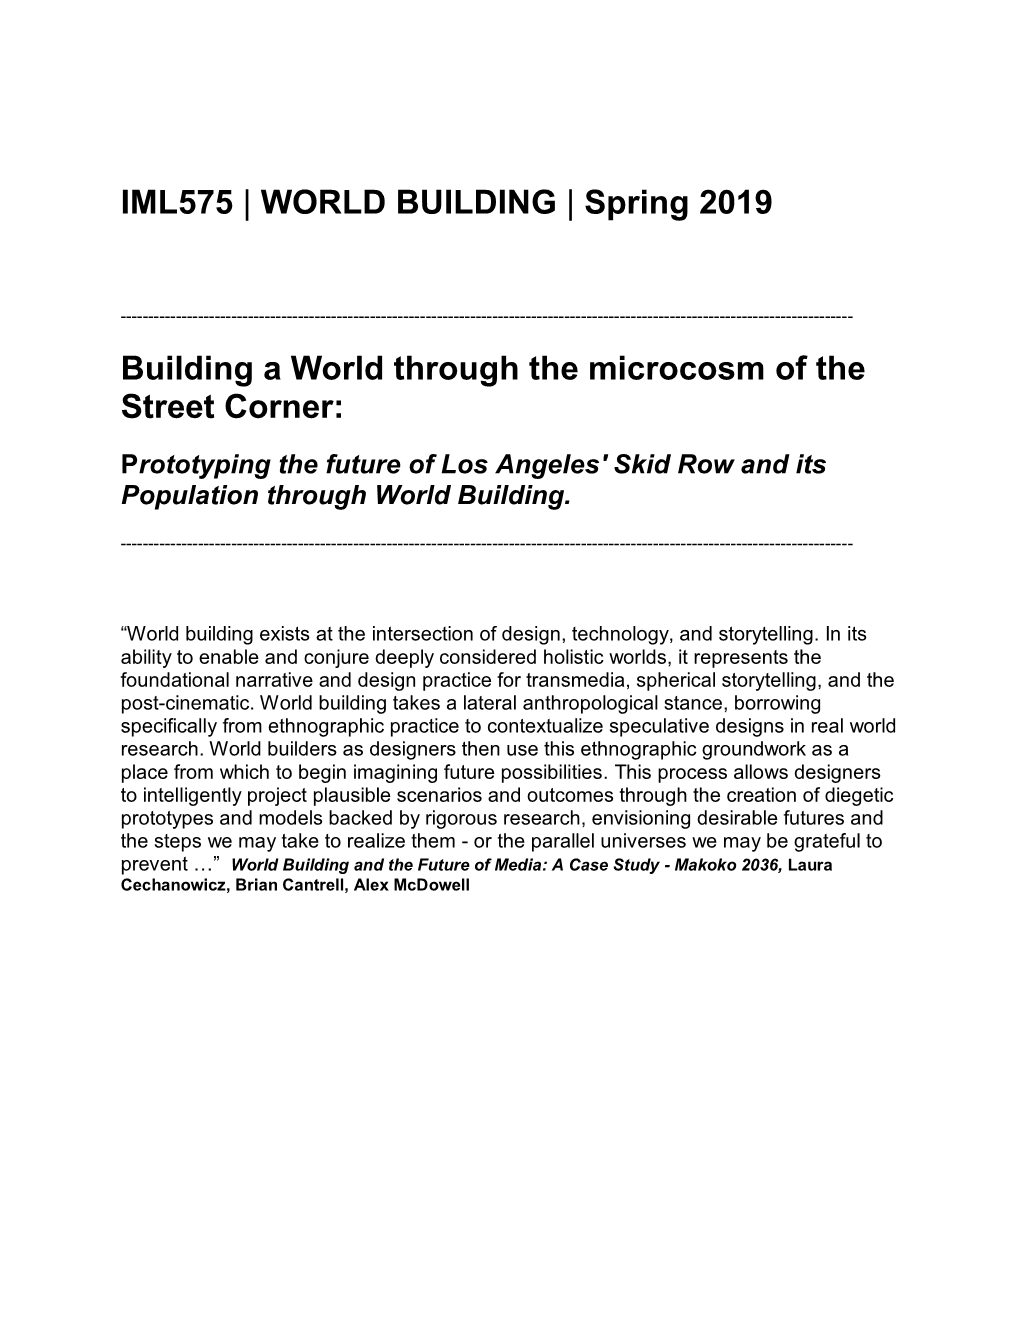 WORLD BUILDING | Spring 2019